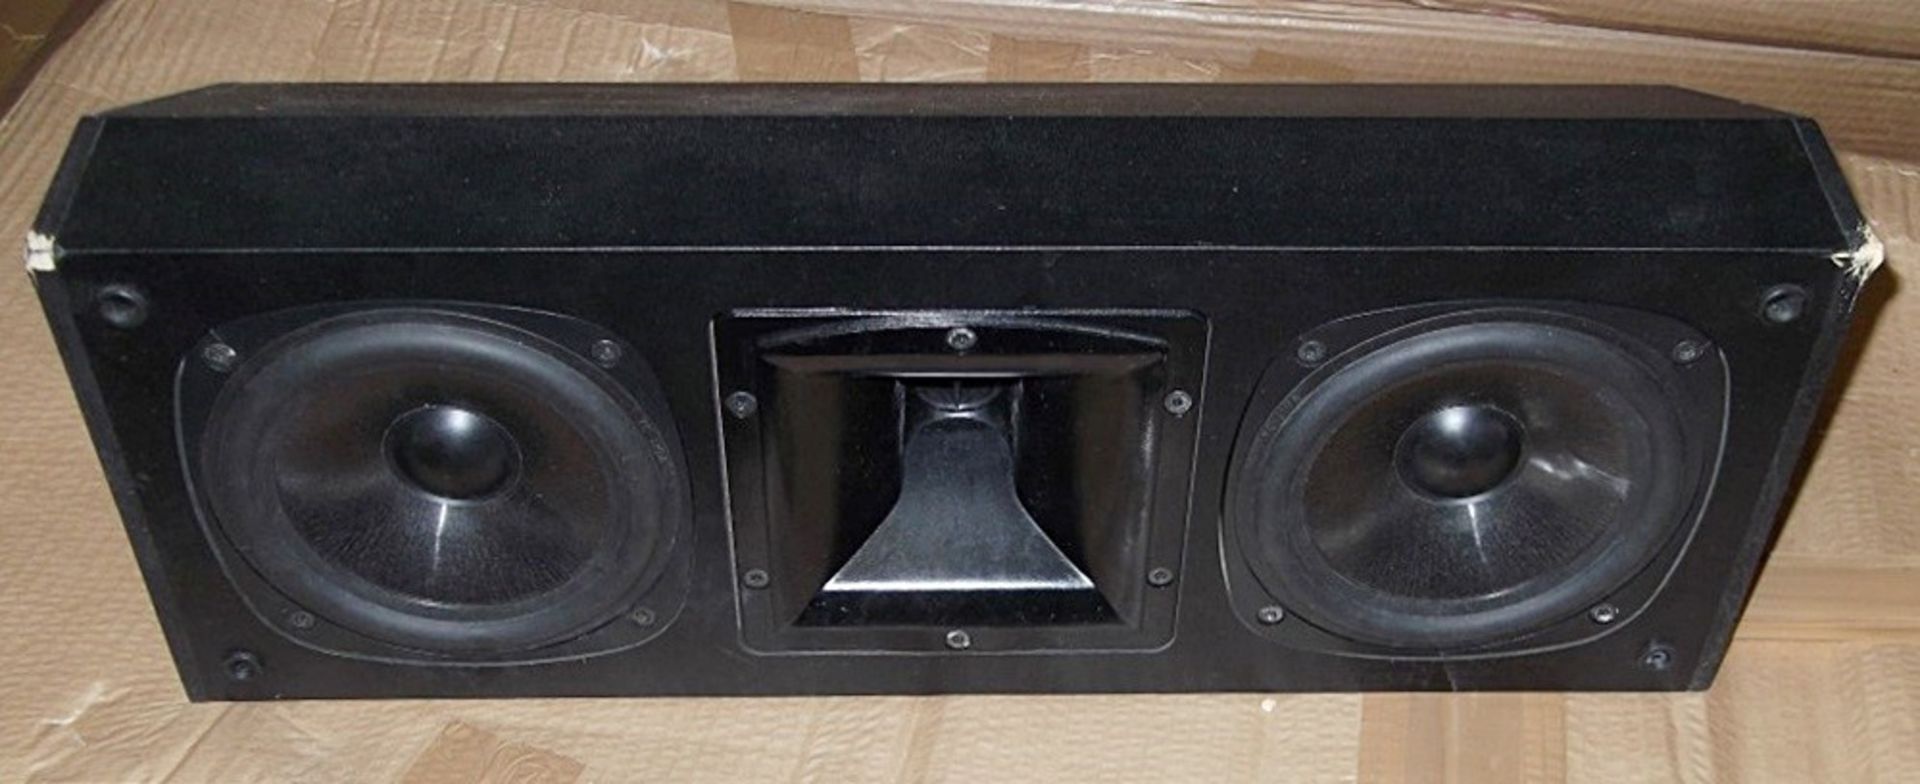 1 x Klipsch SC-1 Center Speaker - Great Working Condition In Original Box - Home Theatre - Quality